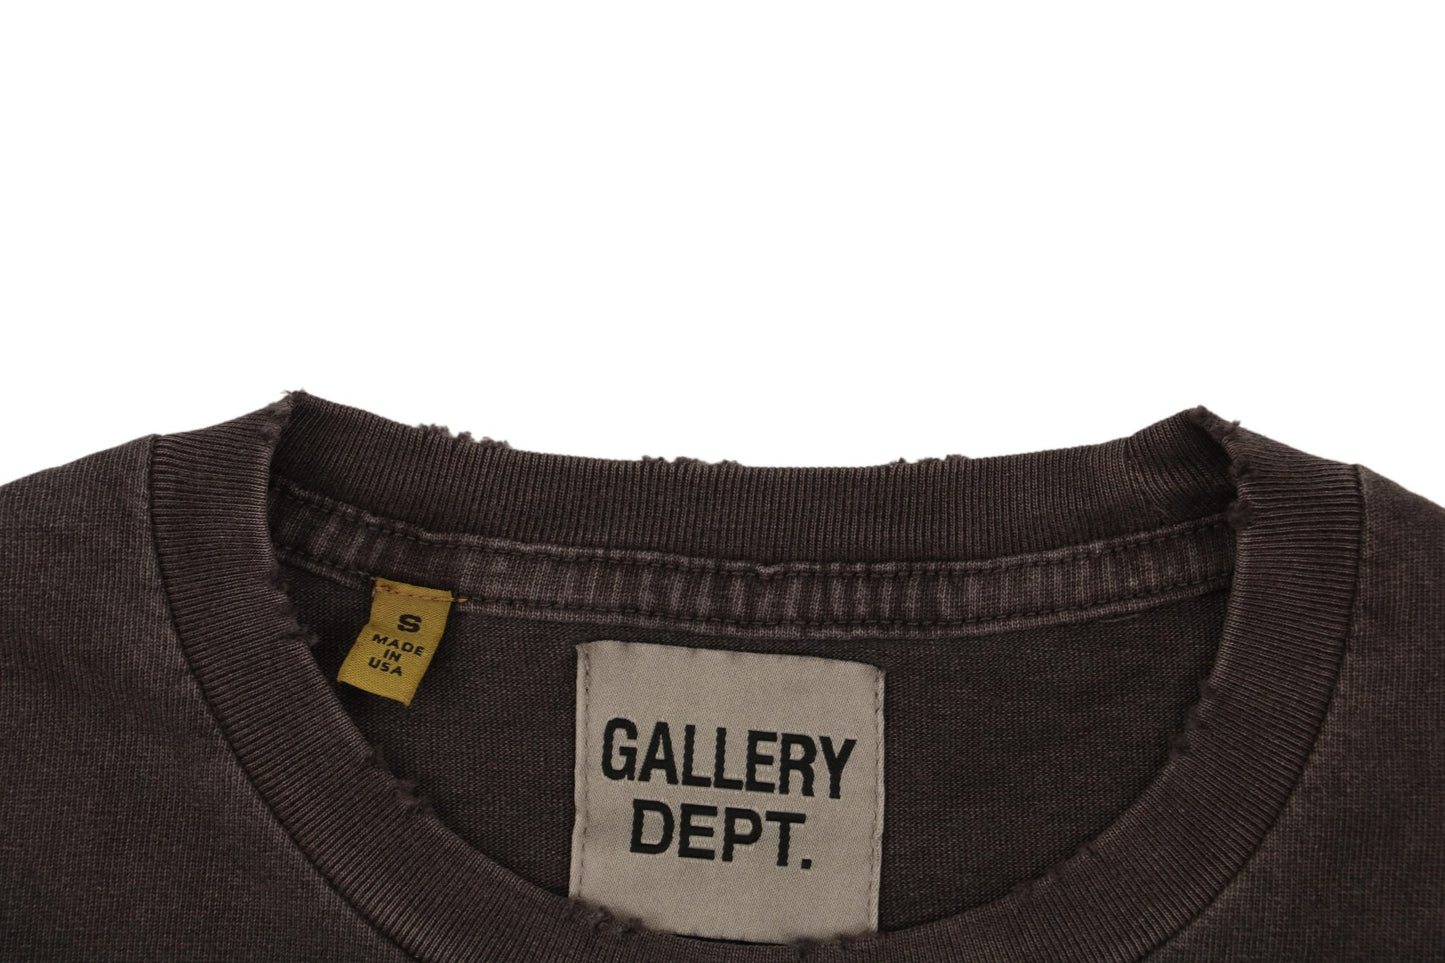 Gallery Dept Art That Kills T-Shirt Black